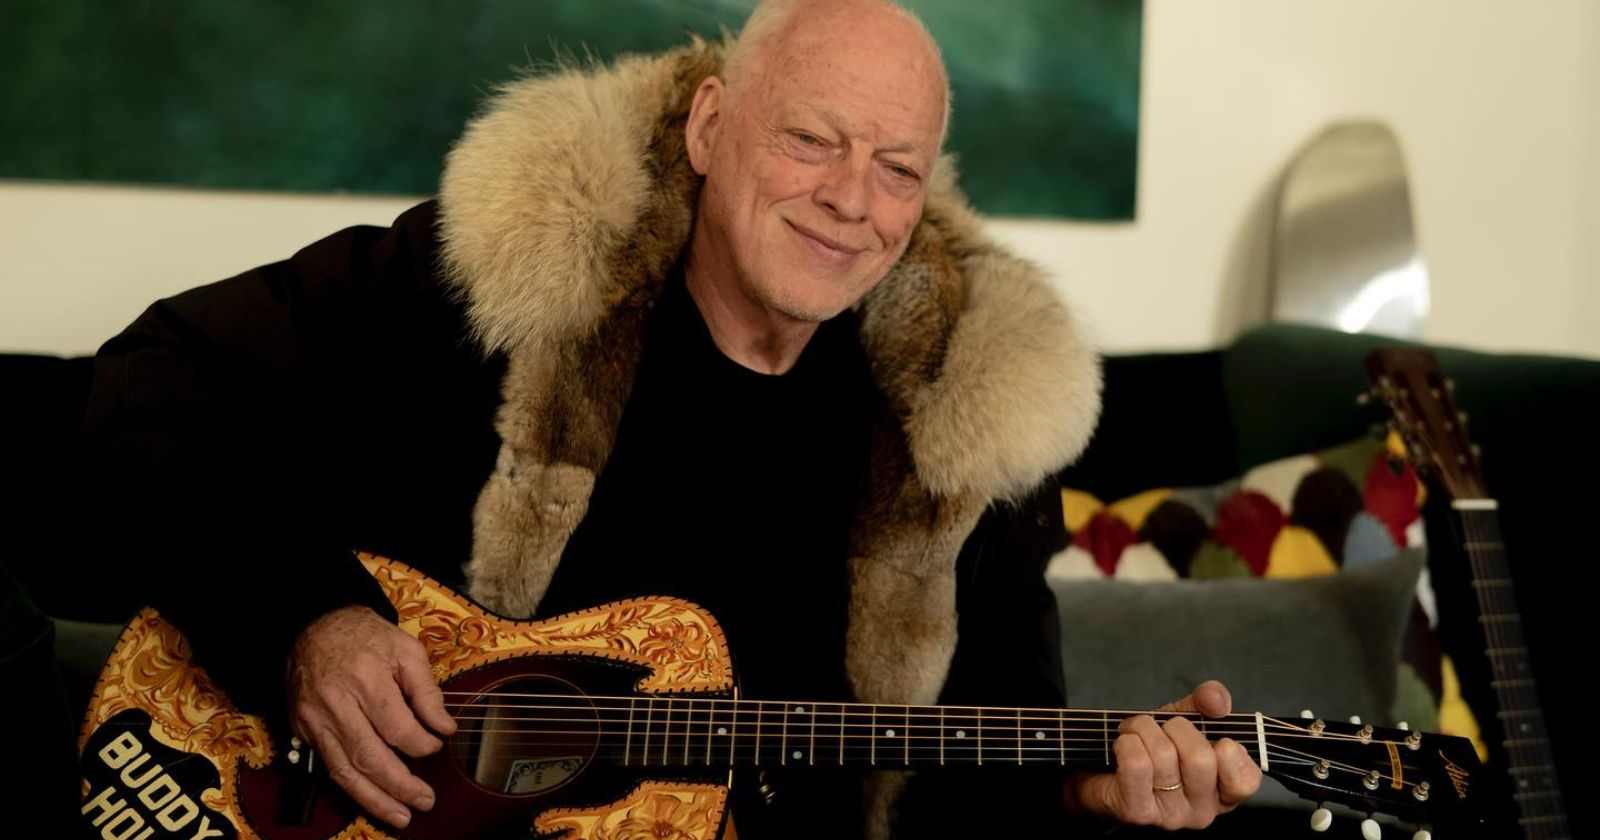 The Pink Floyd album David Gilmour said he personally didn’t like